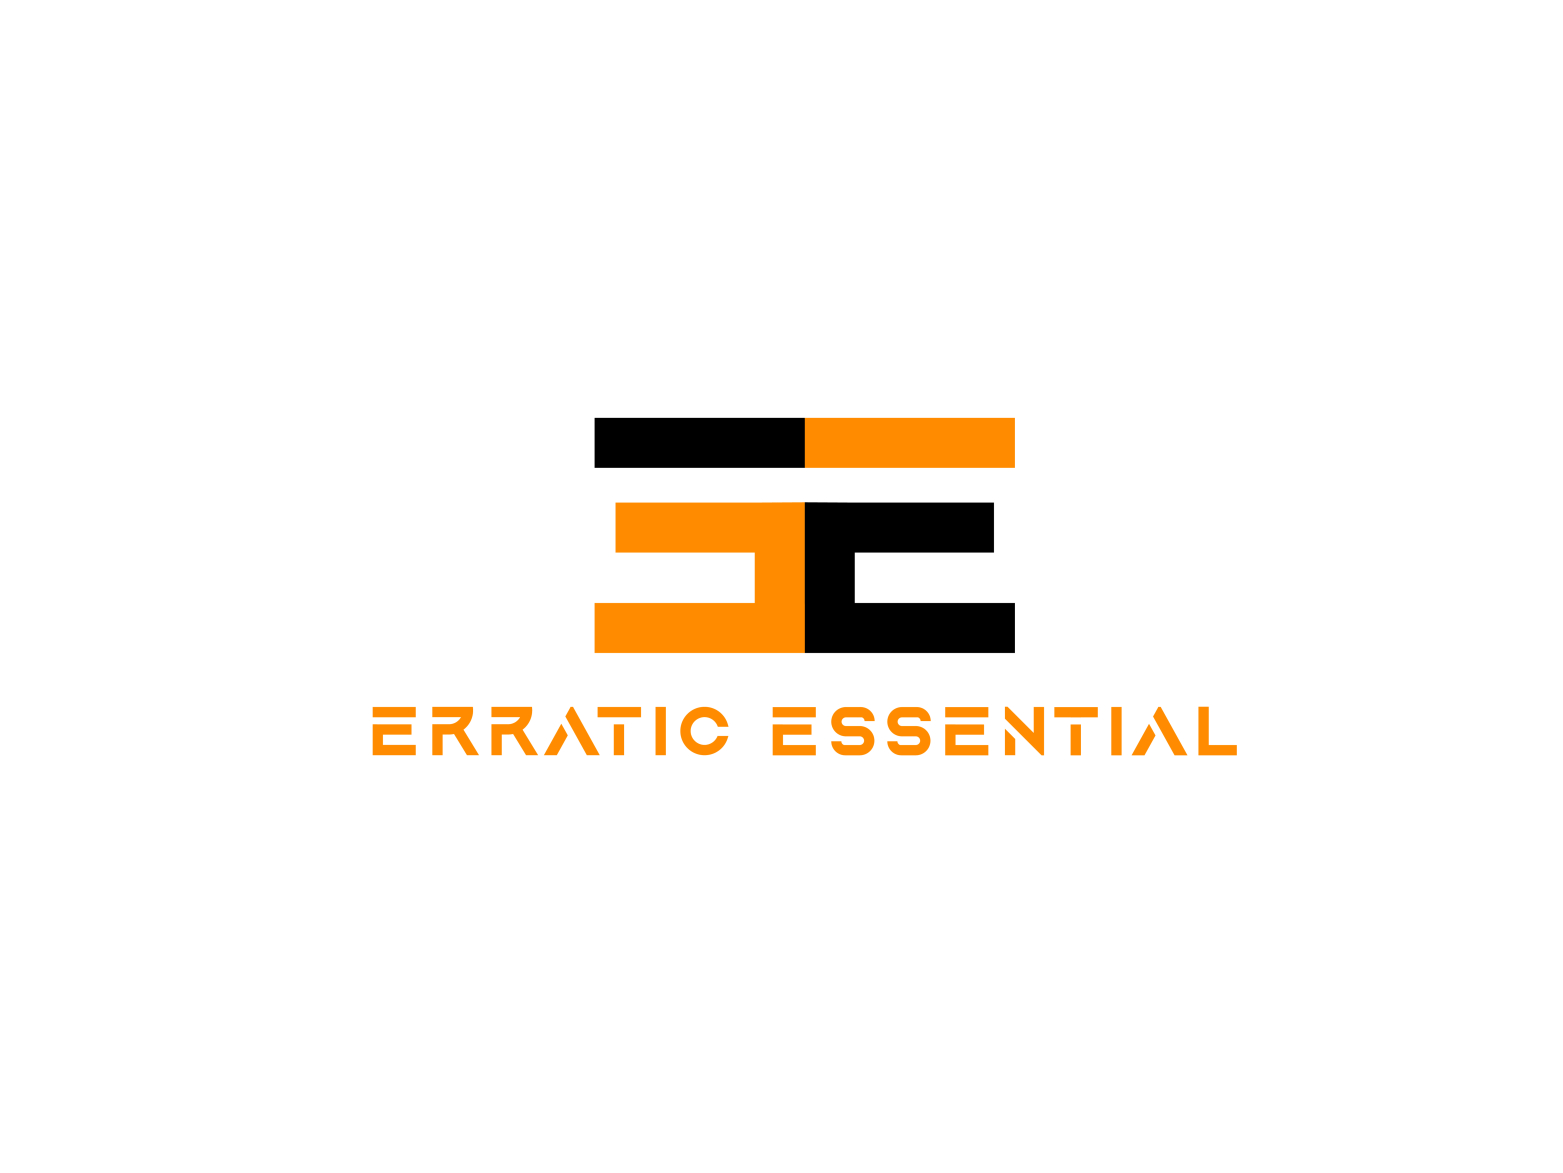 Erratic Essential by Mahfuz Nafi on Dribbble